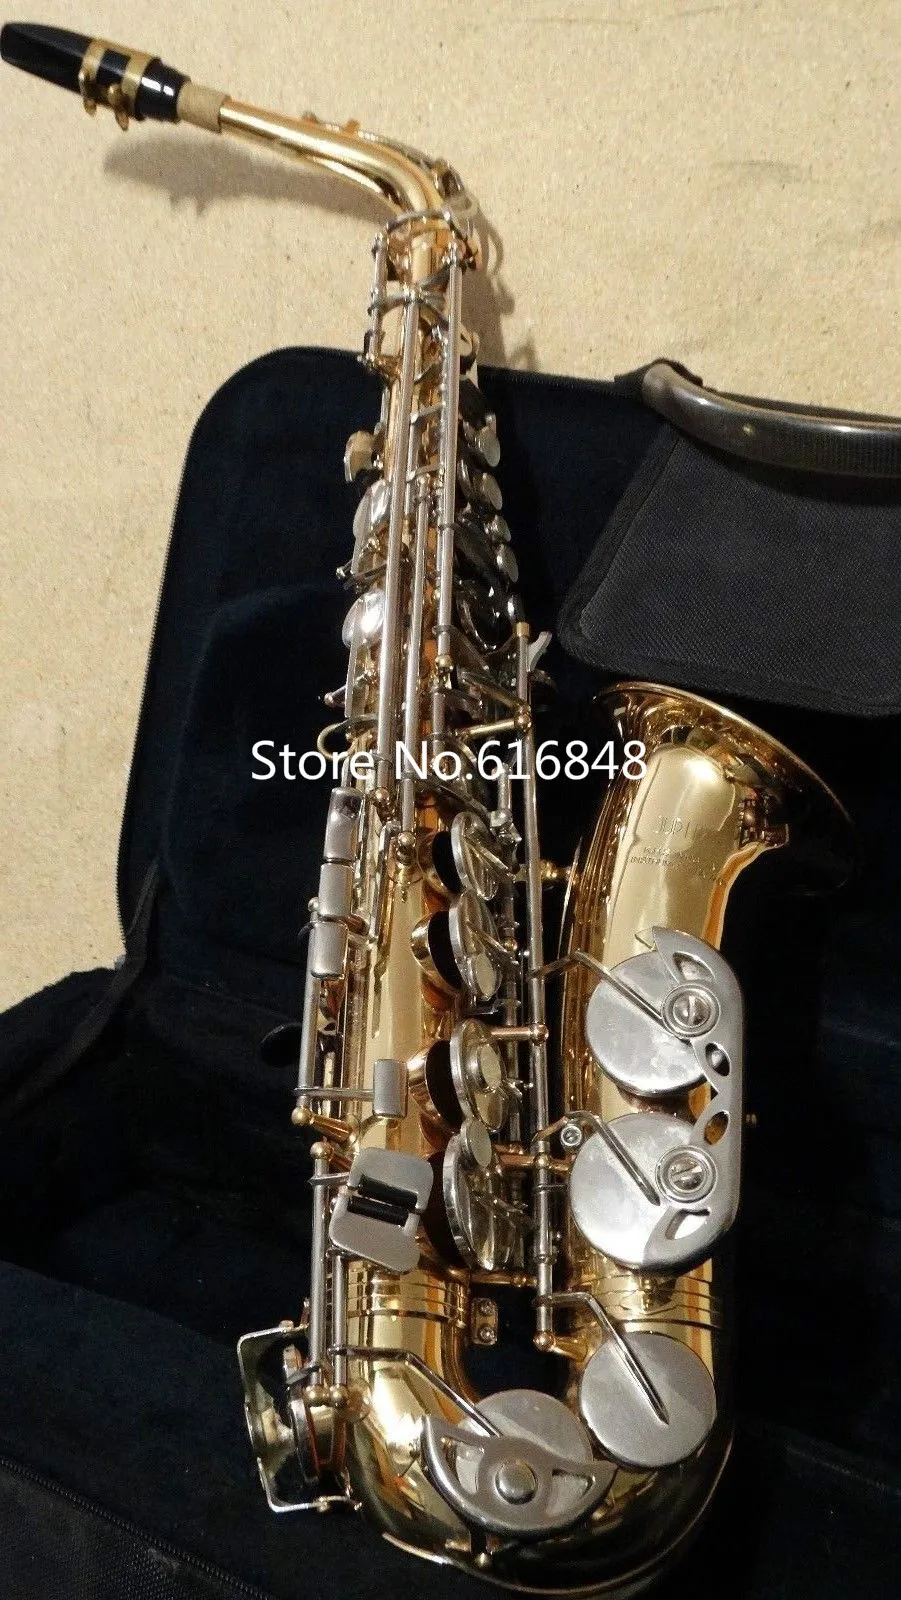 Alta Qualidade Jupiter Jas 669-667 EB Tune Musical Instrumento Alto Saxofone Gold Lacquer Corpo Prata Prata Banhado Frete Grátis